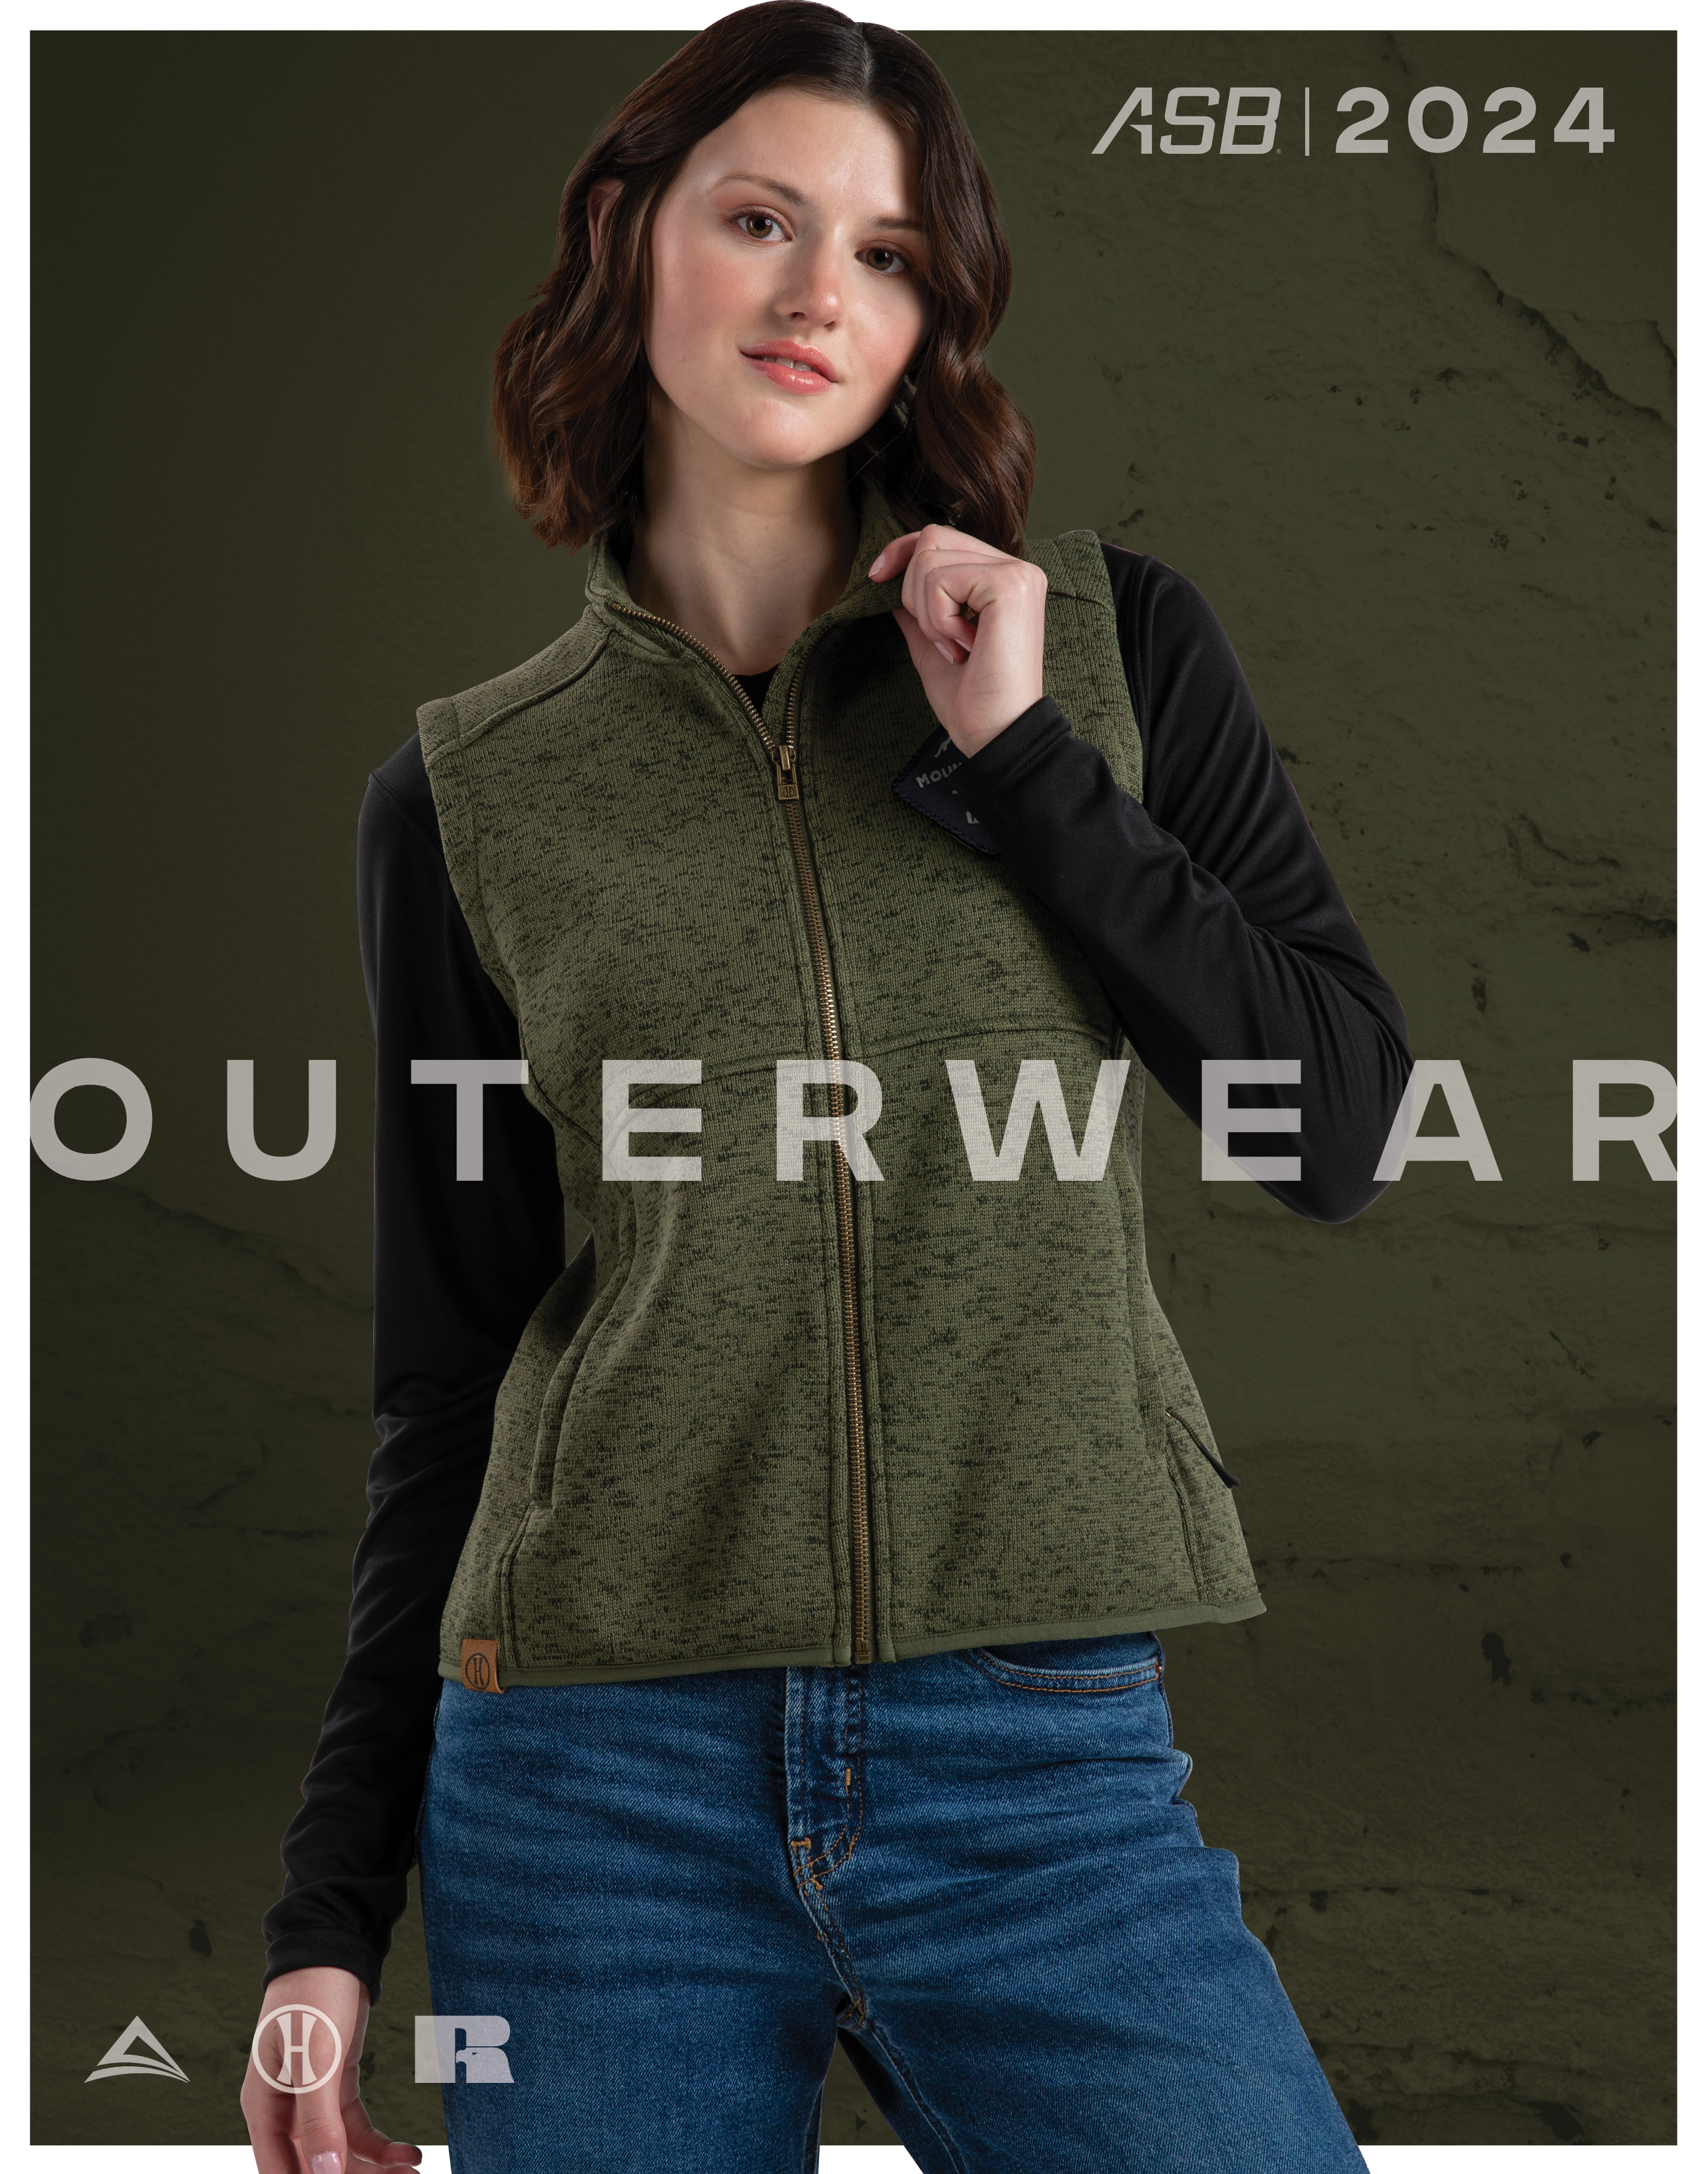 Outerwear Catalog 2024